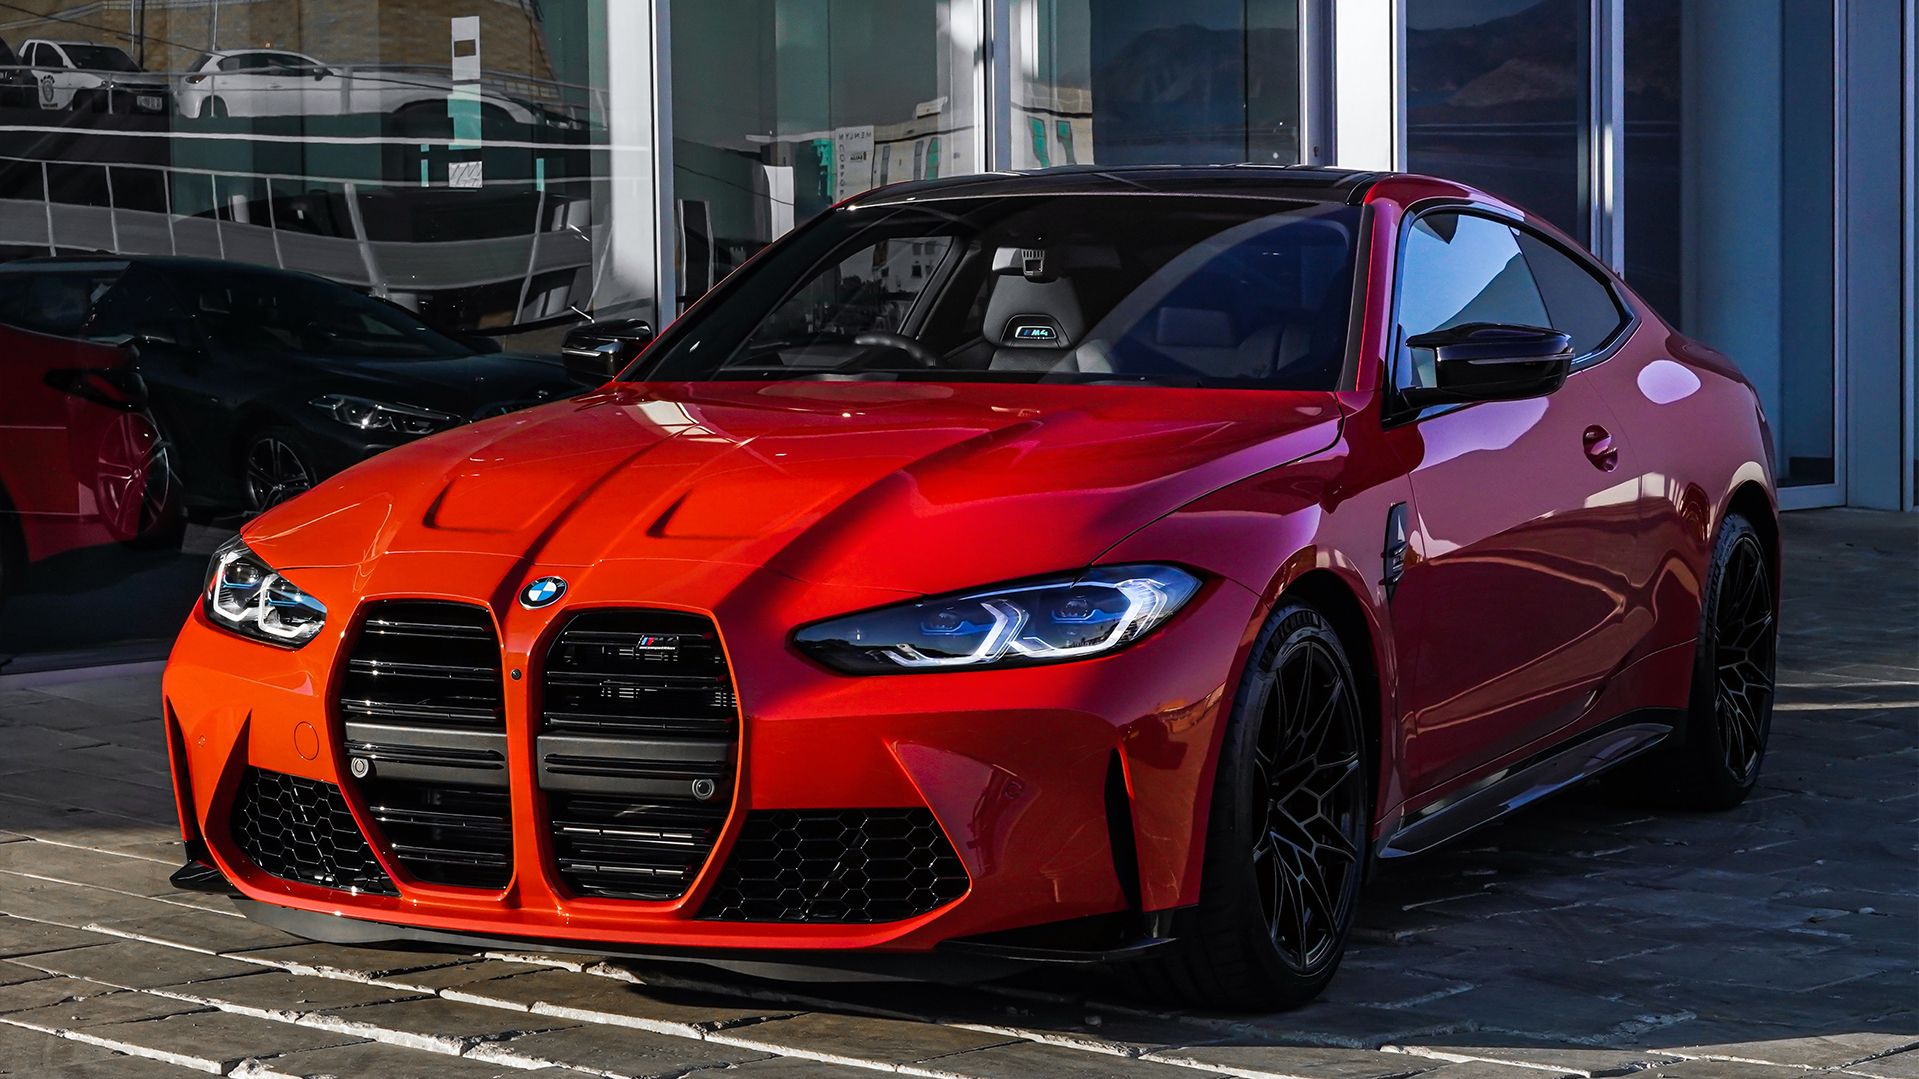 A Red BMW M4